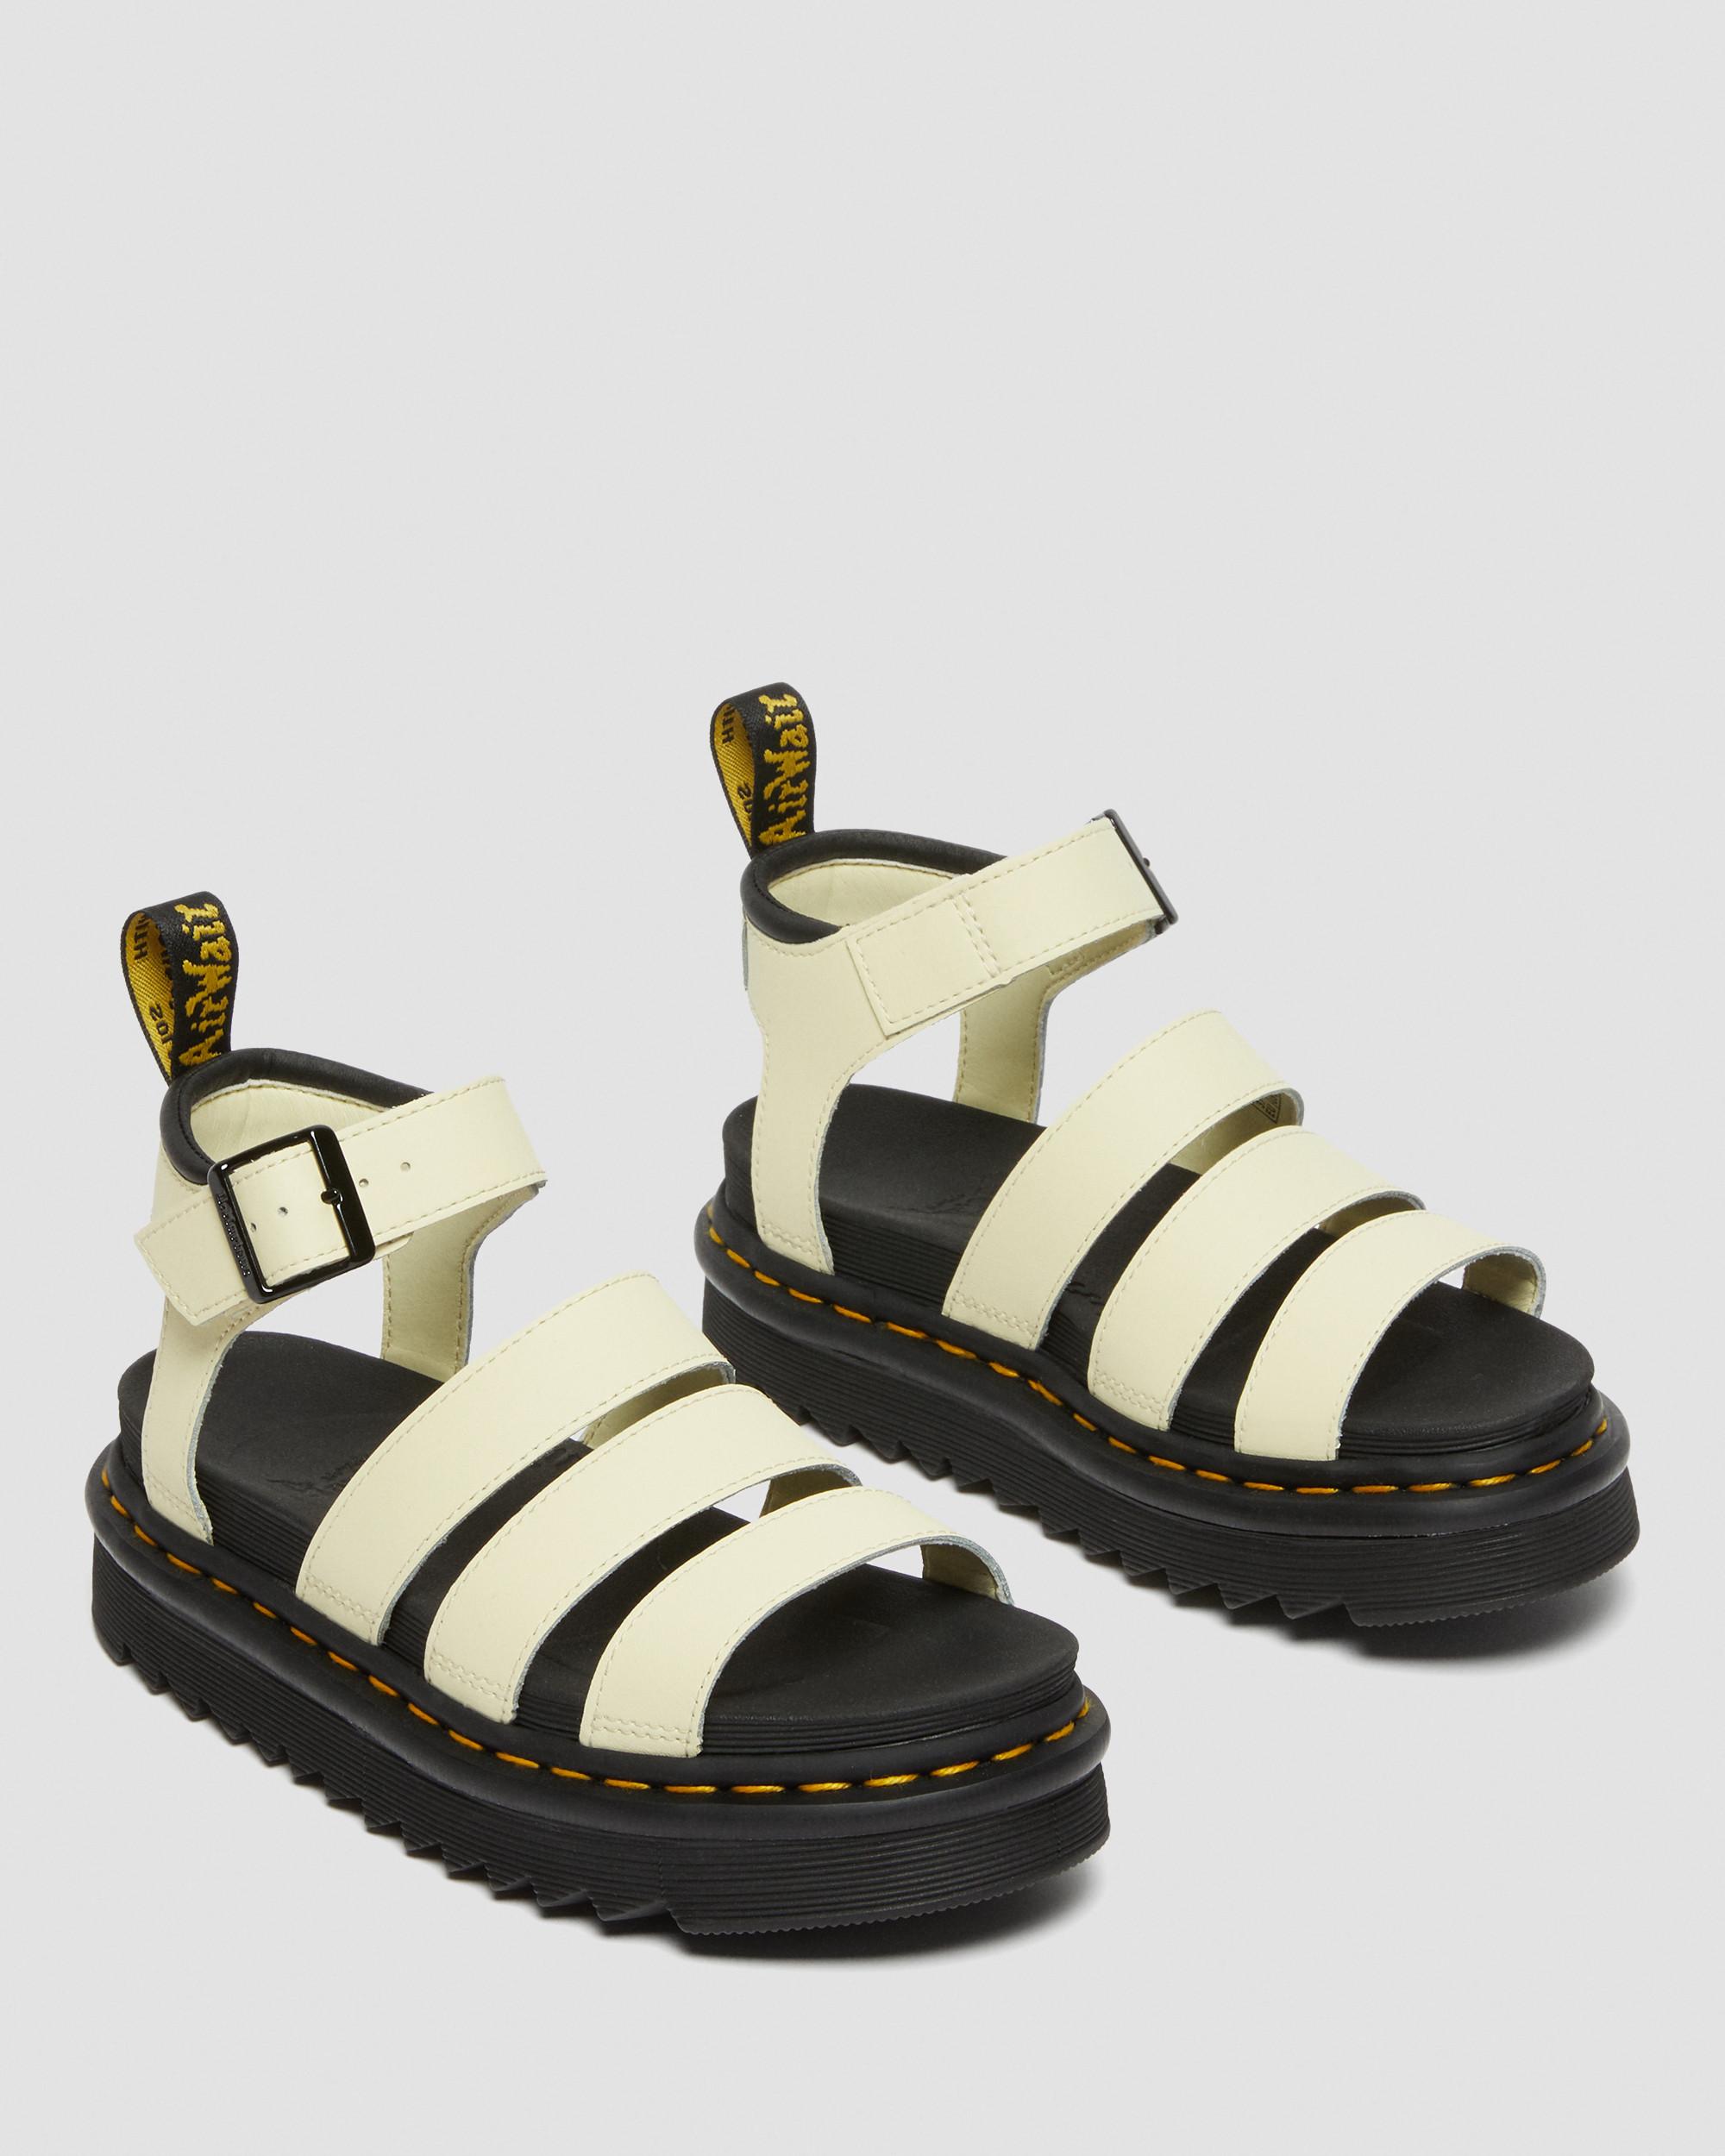 Blaire Hydro Leather Strap Sandals in Cream